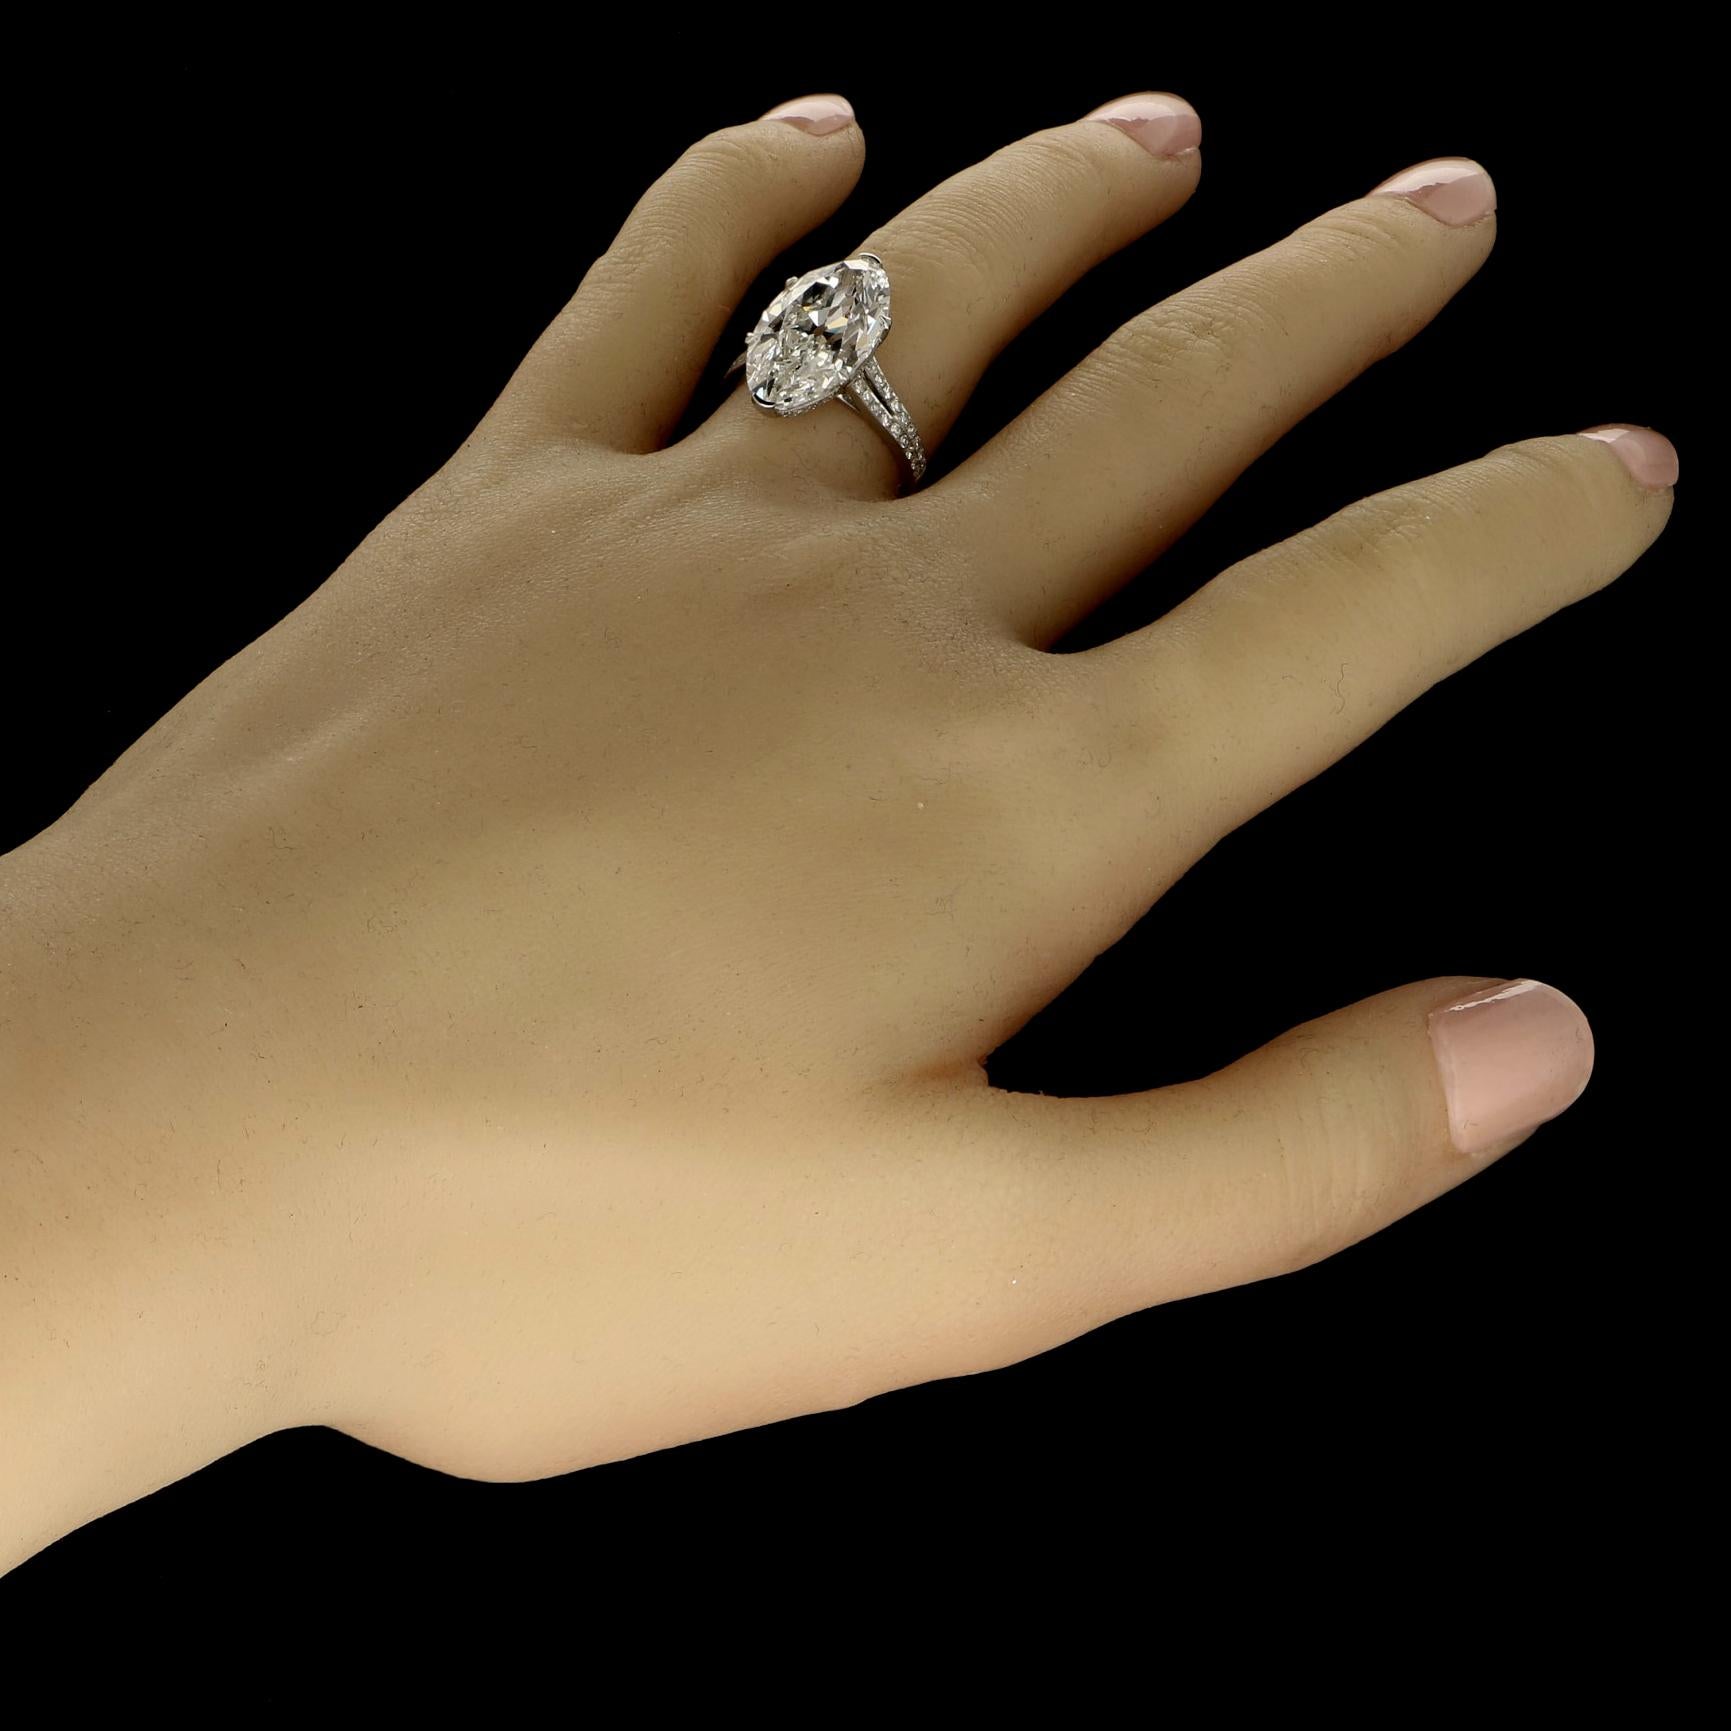 Marquise Cut 8.31 Carat H SI1 Moval Diamond Ring with Elegant Diamond Setting by Hancocks